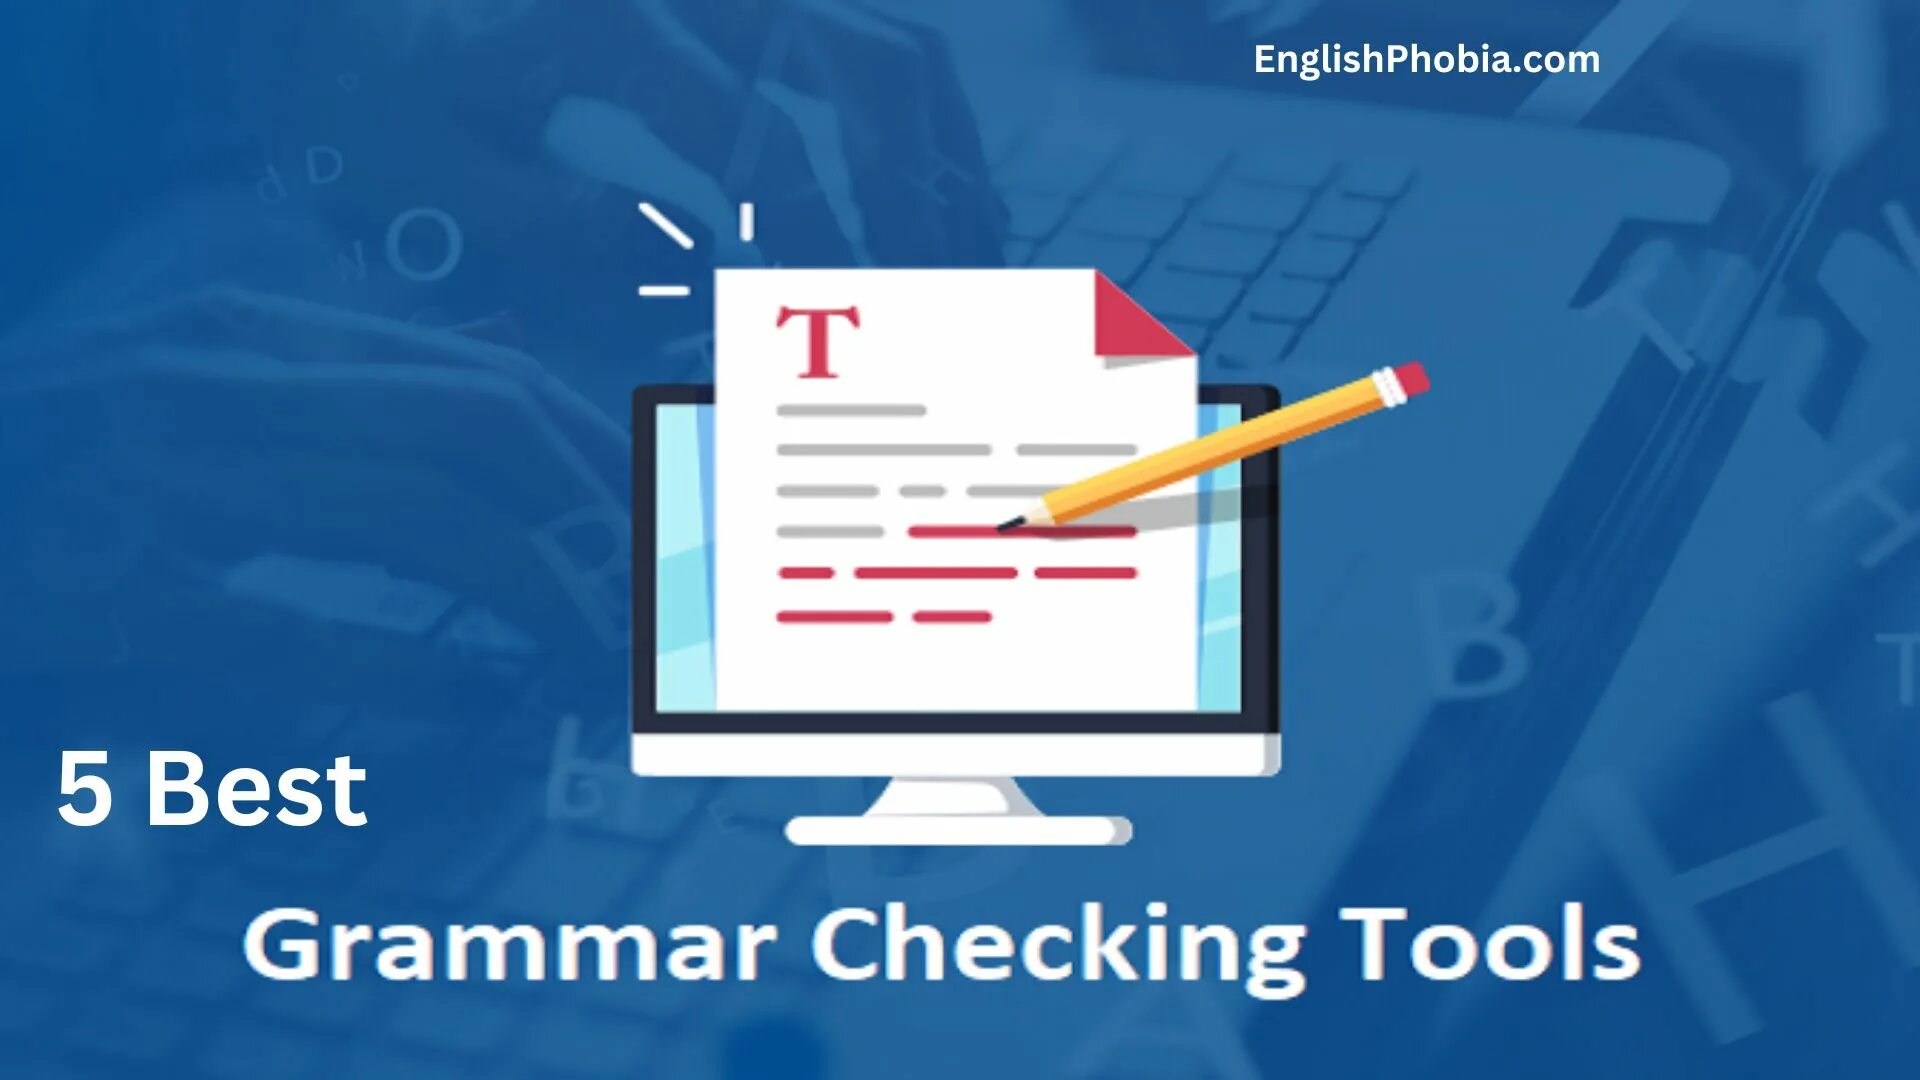 Grammar Checker. Grammar Checker with explanation. Check Grammar website. Writing checker